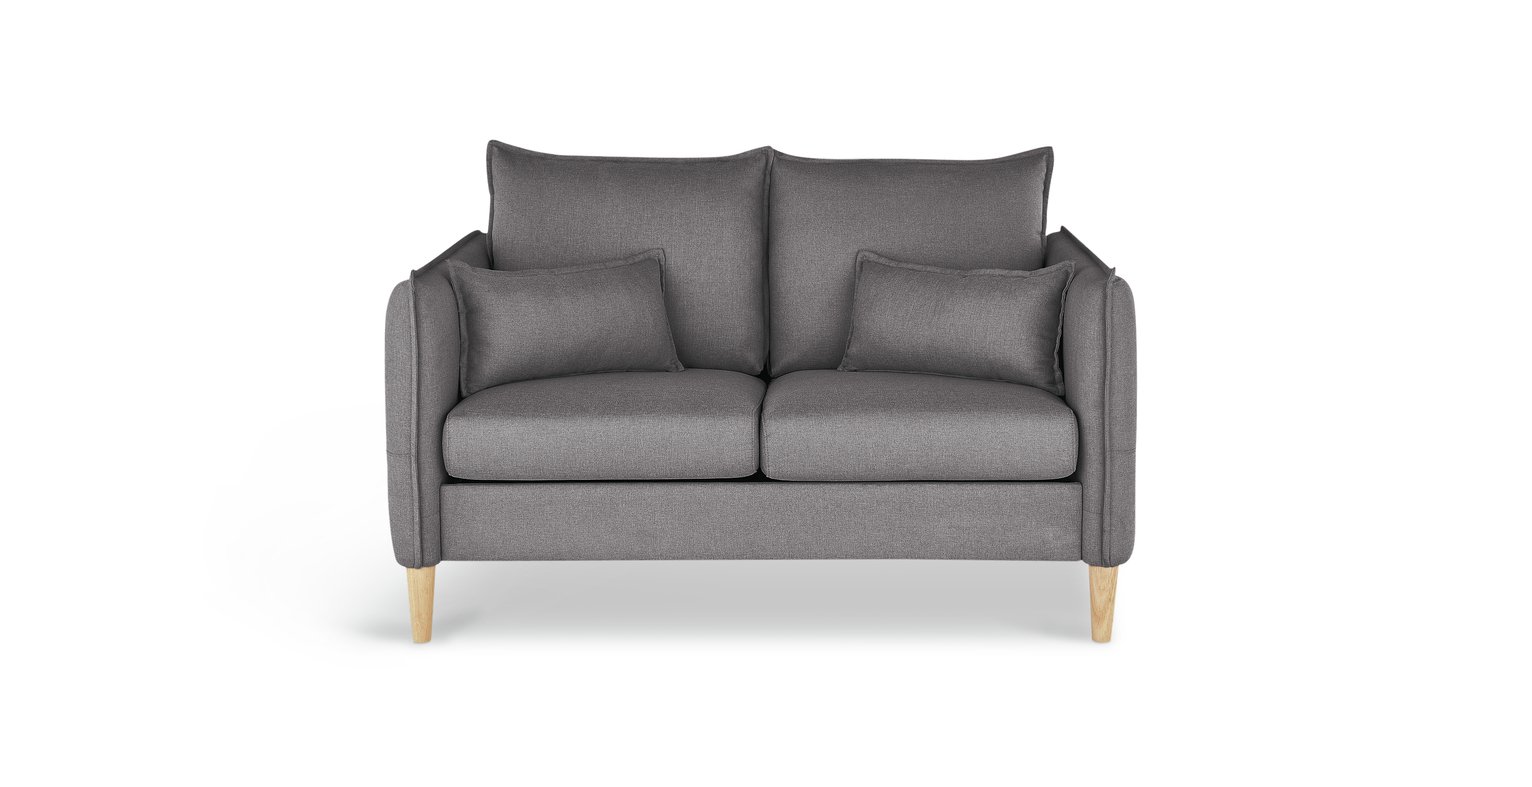 Habitat Etta 2 Seater Fabric Sofa in a Box - Grey